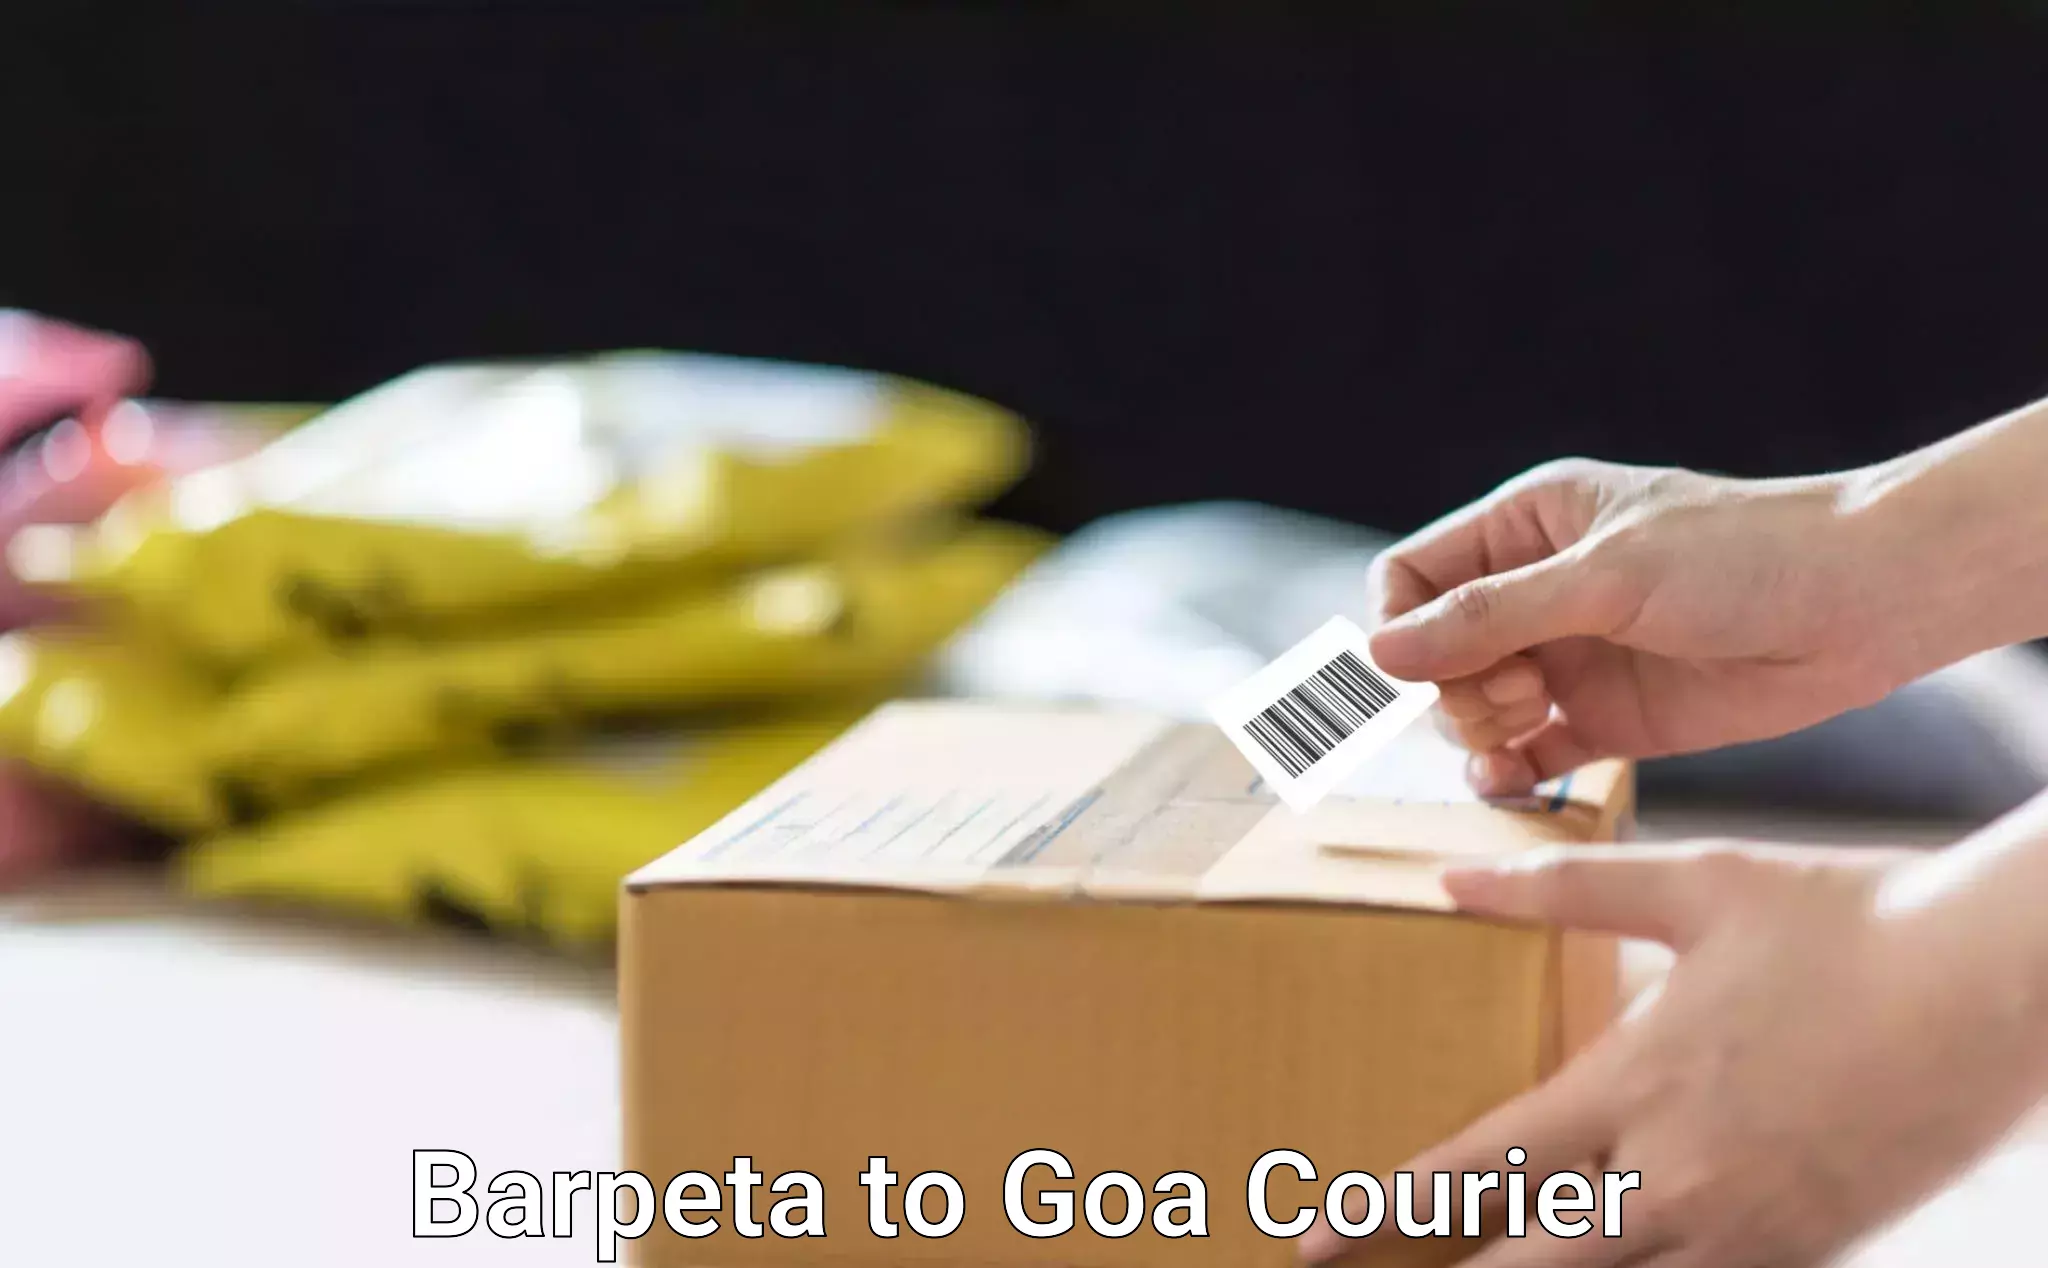 Express delivery network Barpeta to Goa